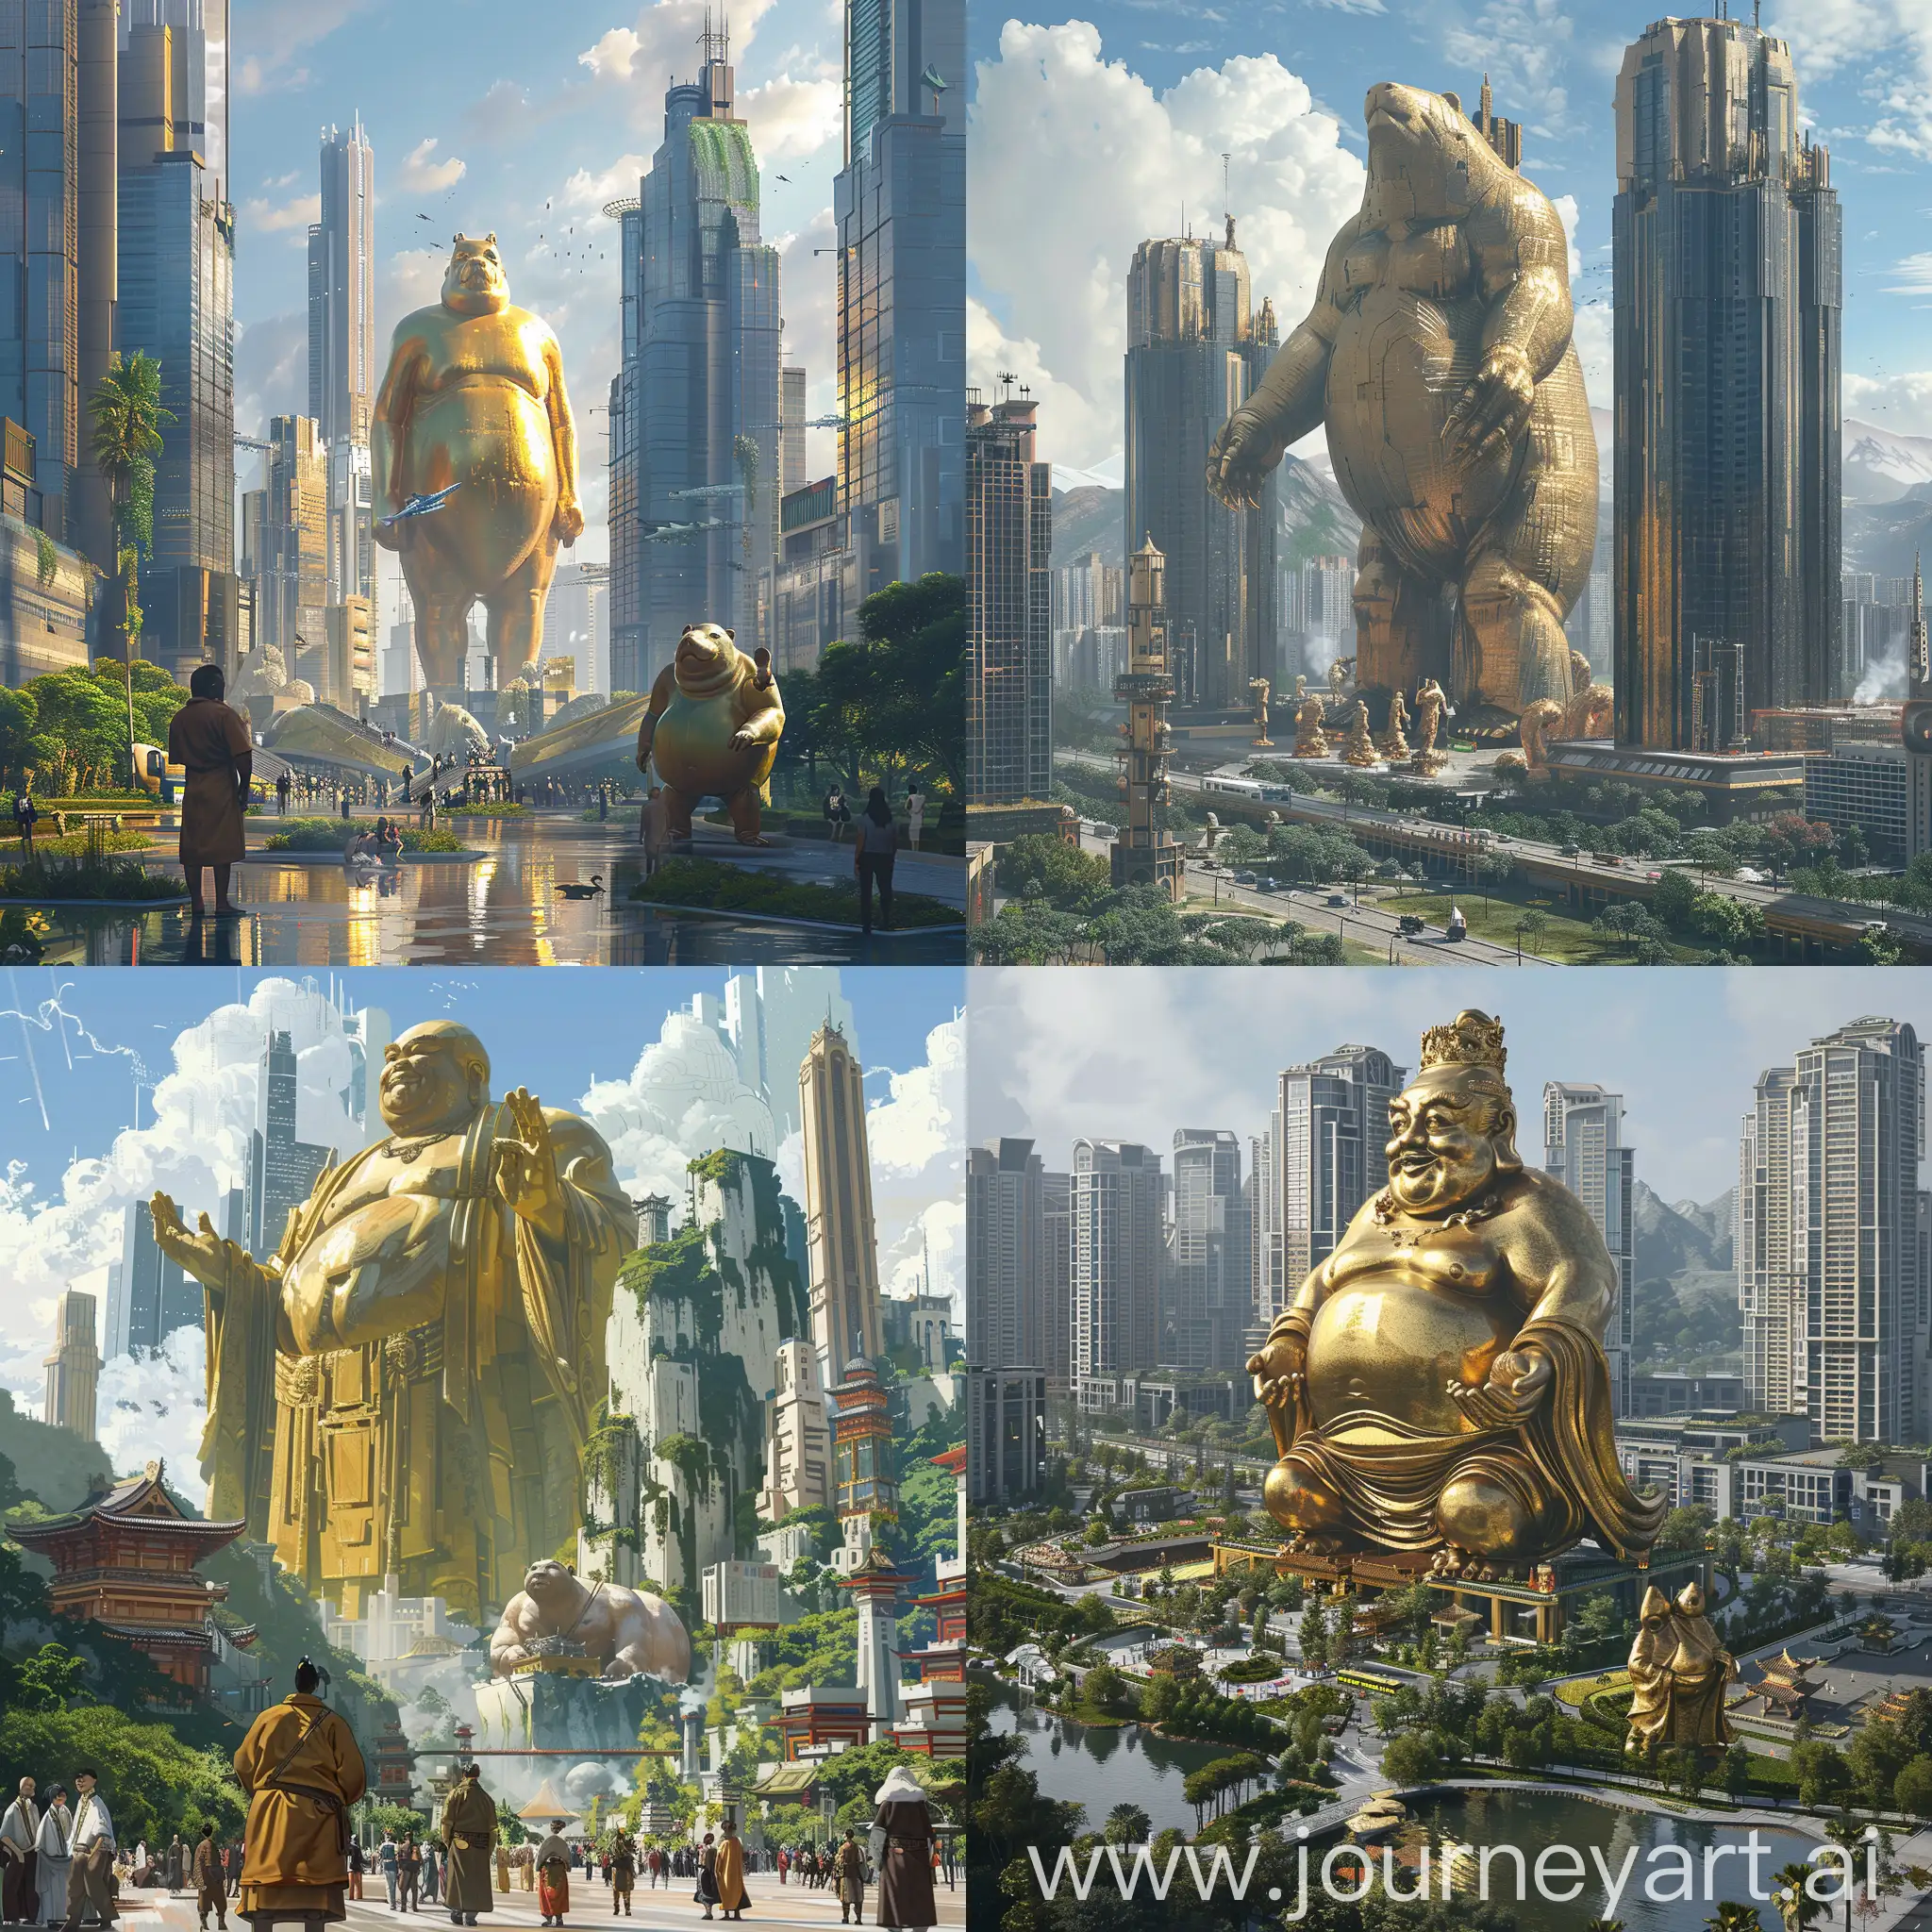 Modern-Cityscape-with-Golden-Statue-of-Bo-Sinn-and-Fat-Man-Holding-Capybara